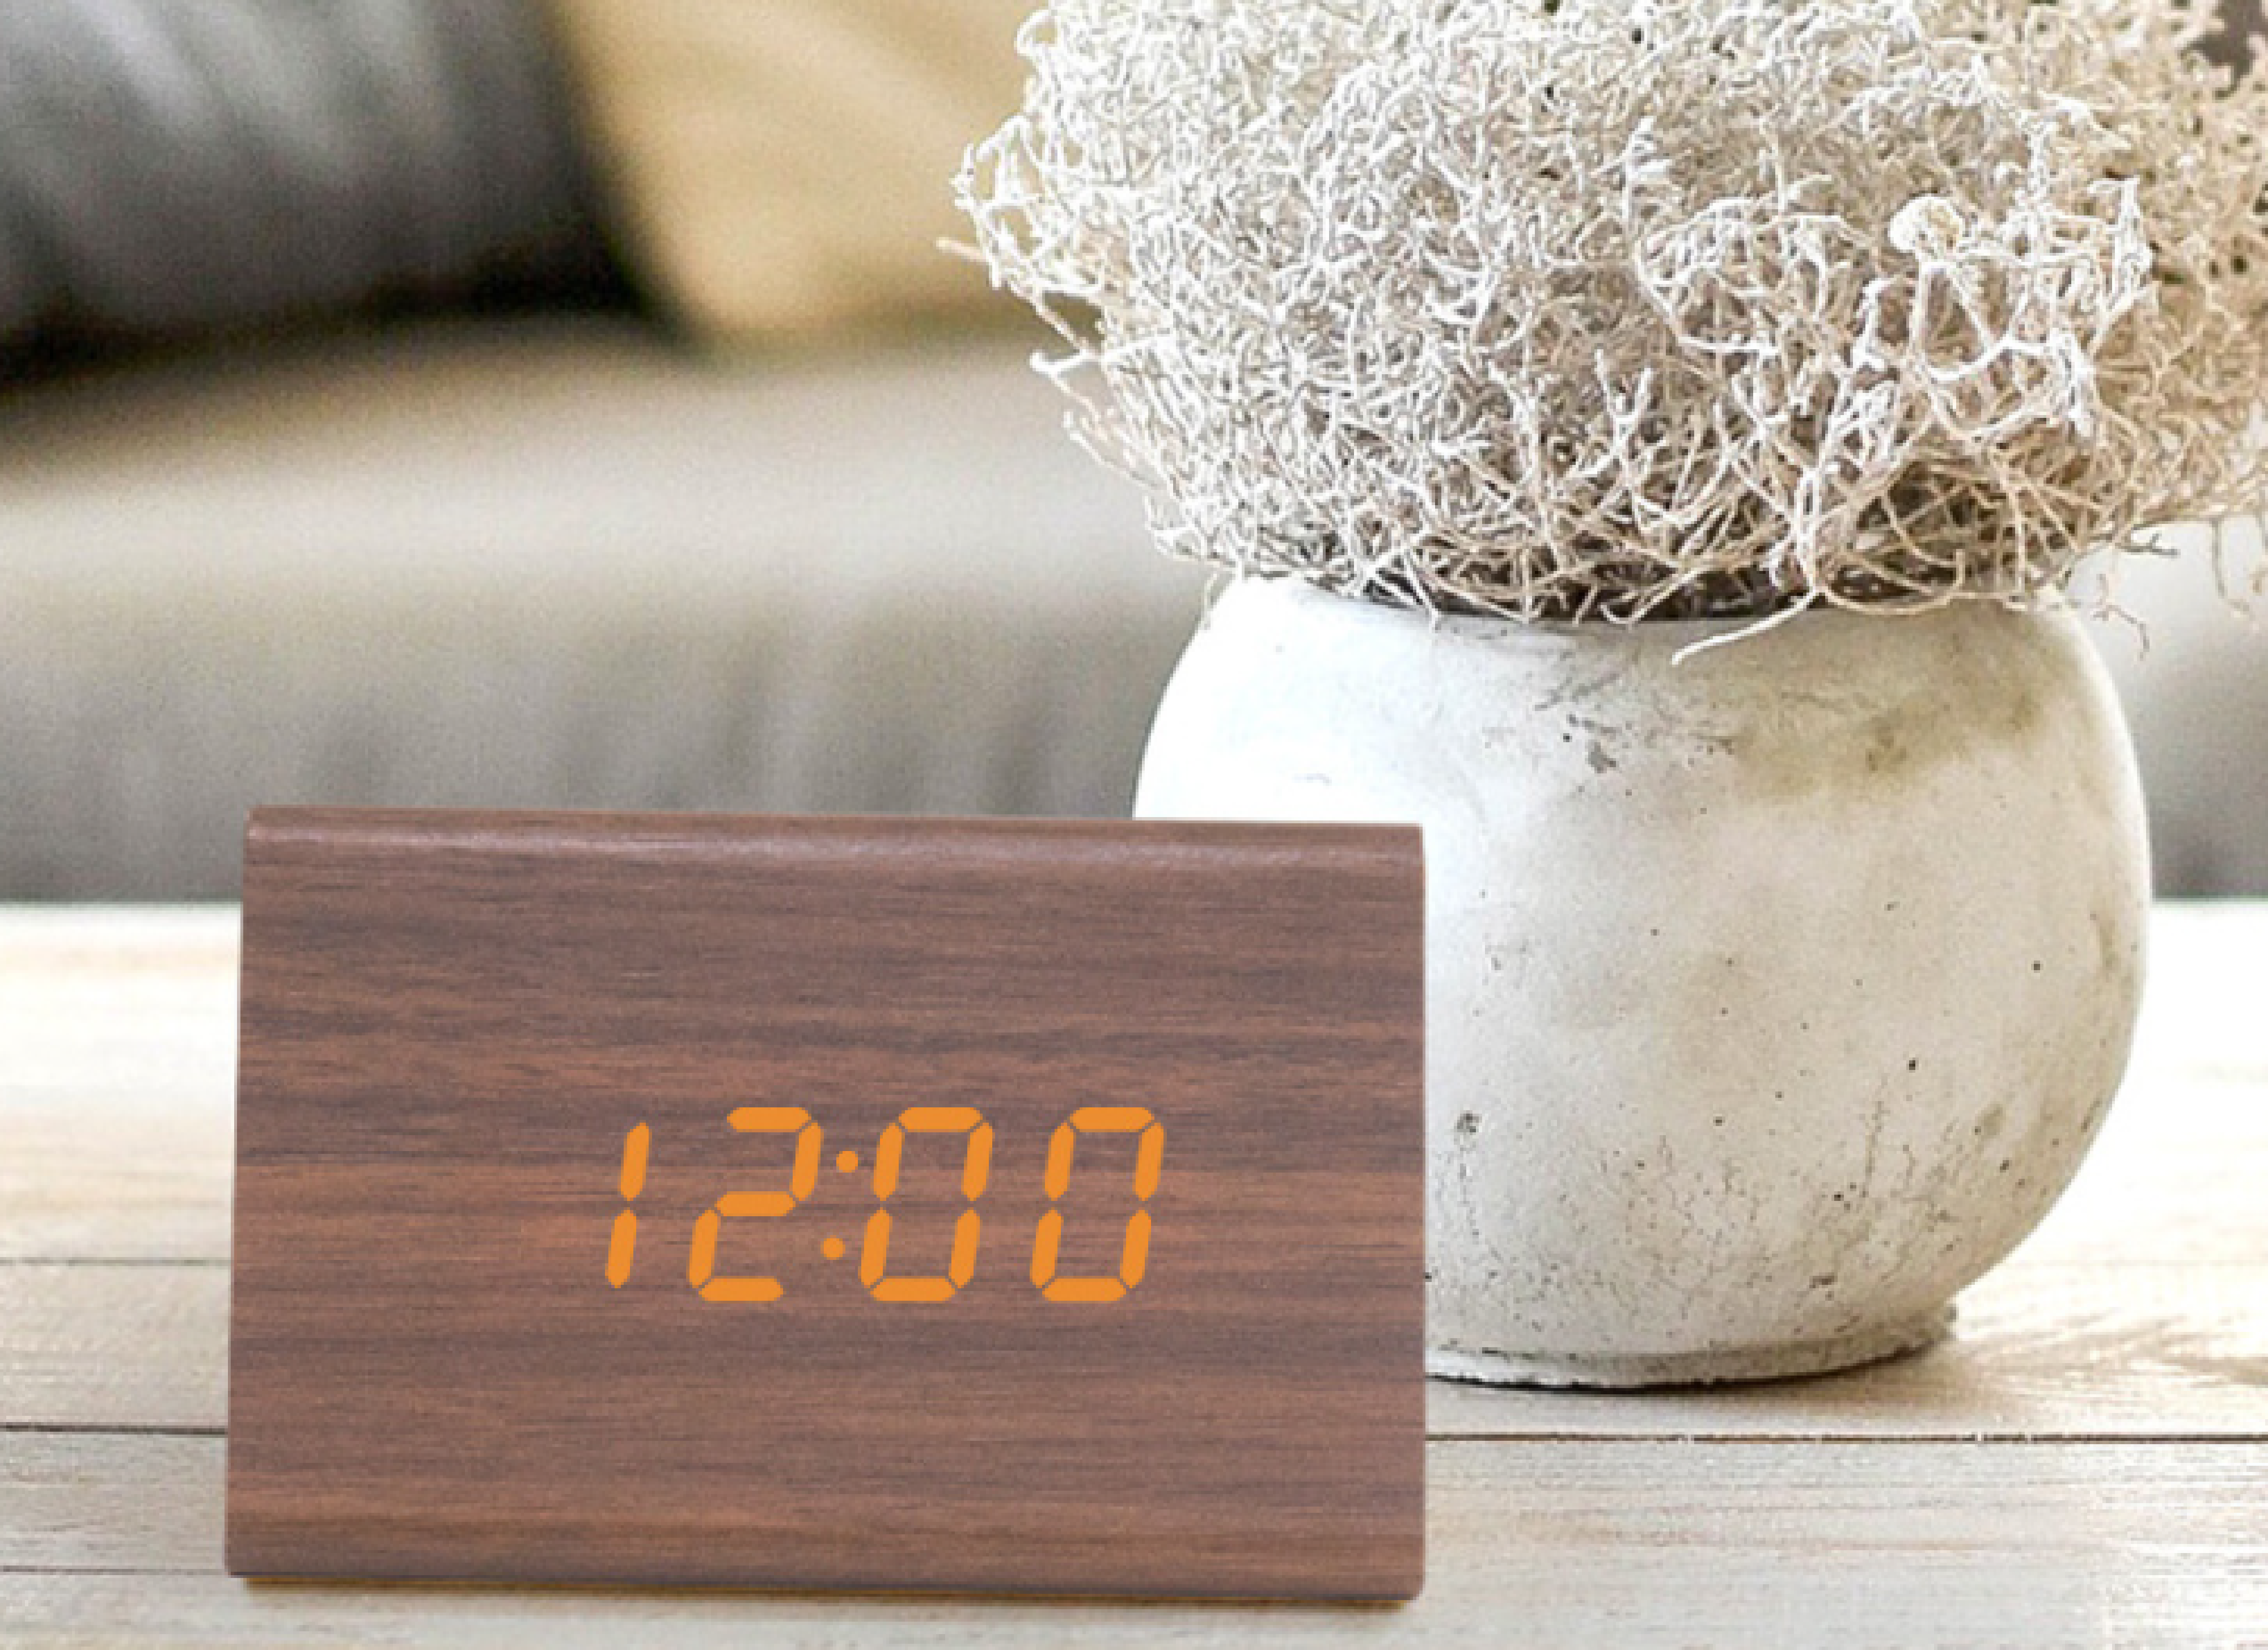 LED digital electronic alarm clock wood clock fashion creative electronic clock mute clock electronic clock